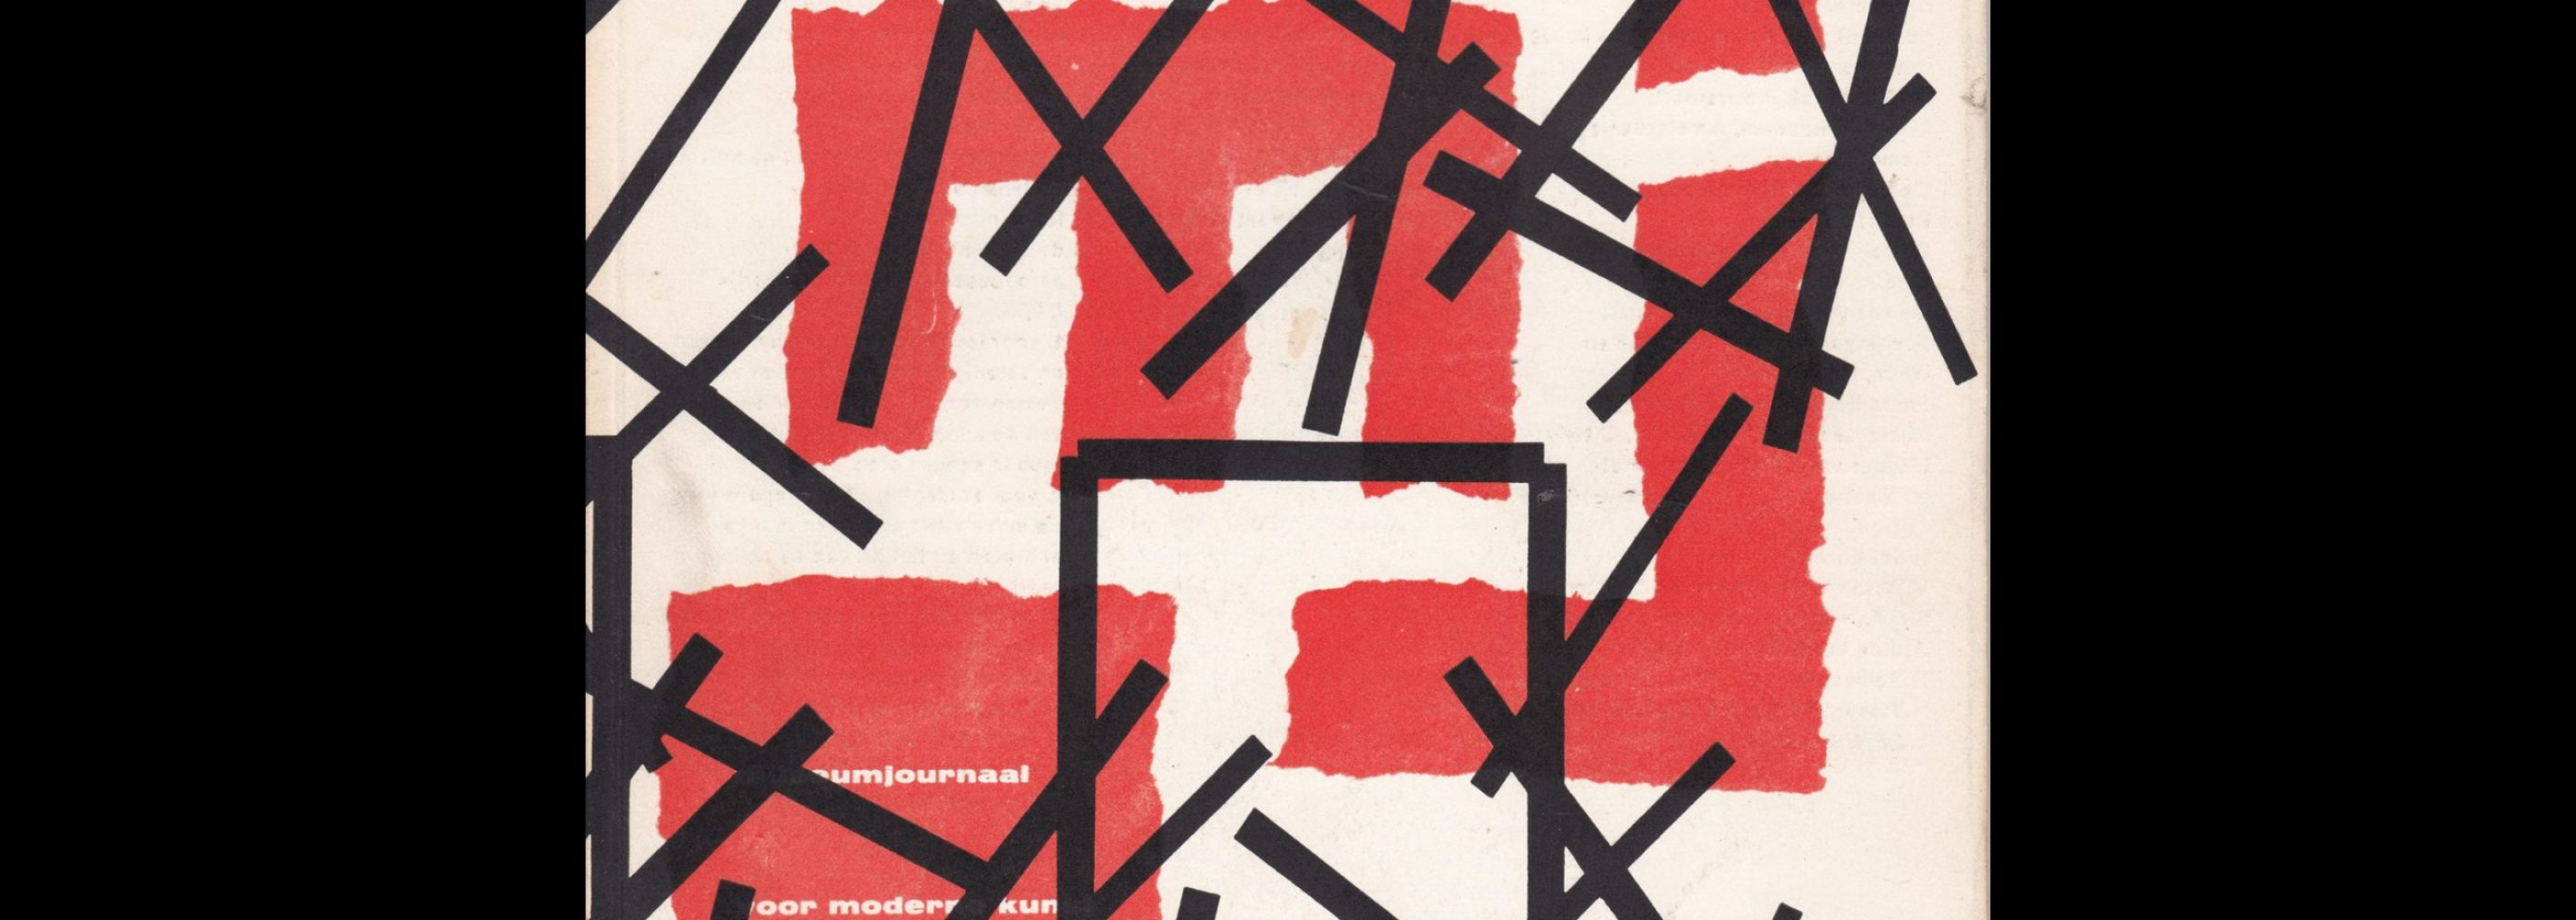 Museumjournaal, Serie 10 no7, 1965. Designed by Willem Sandberg